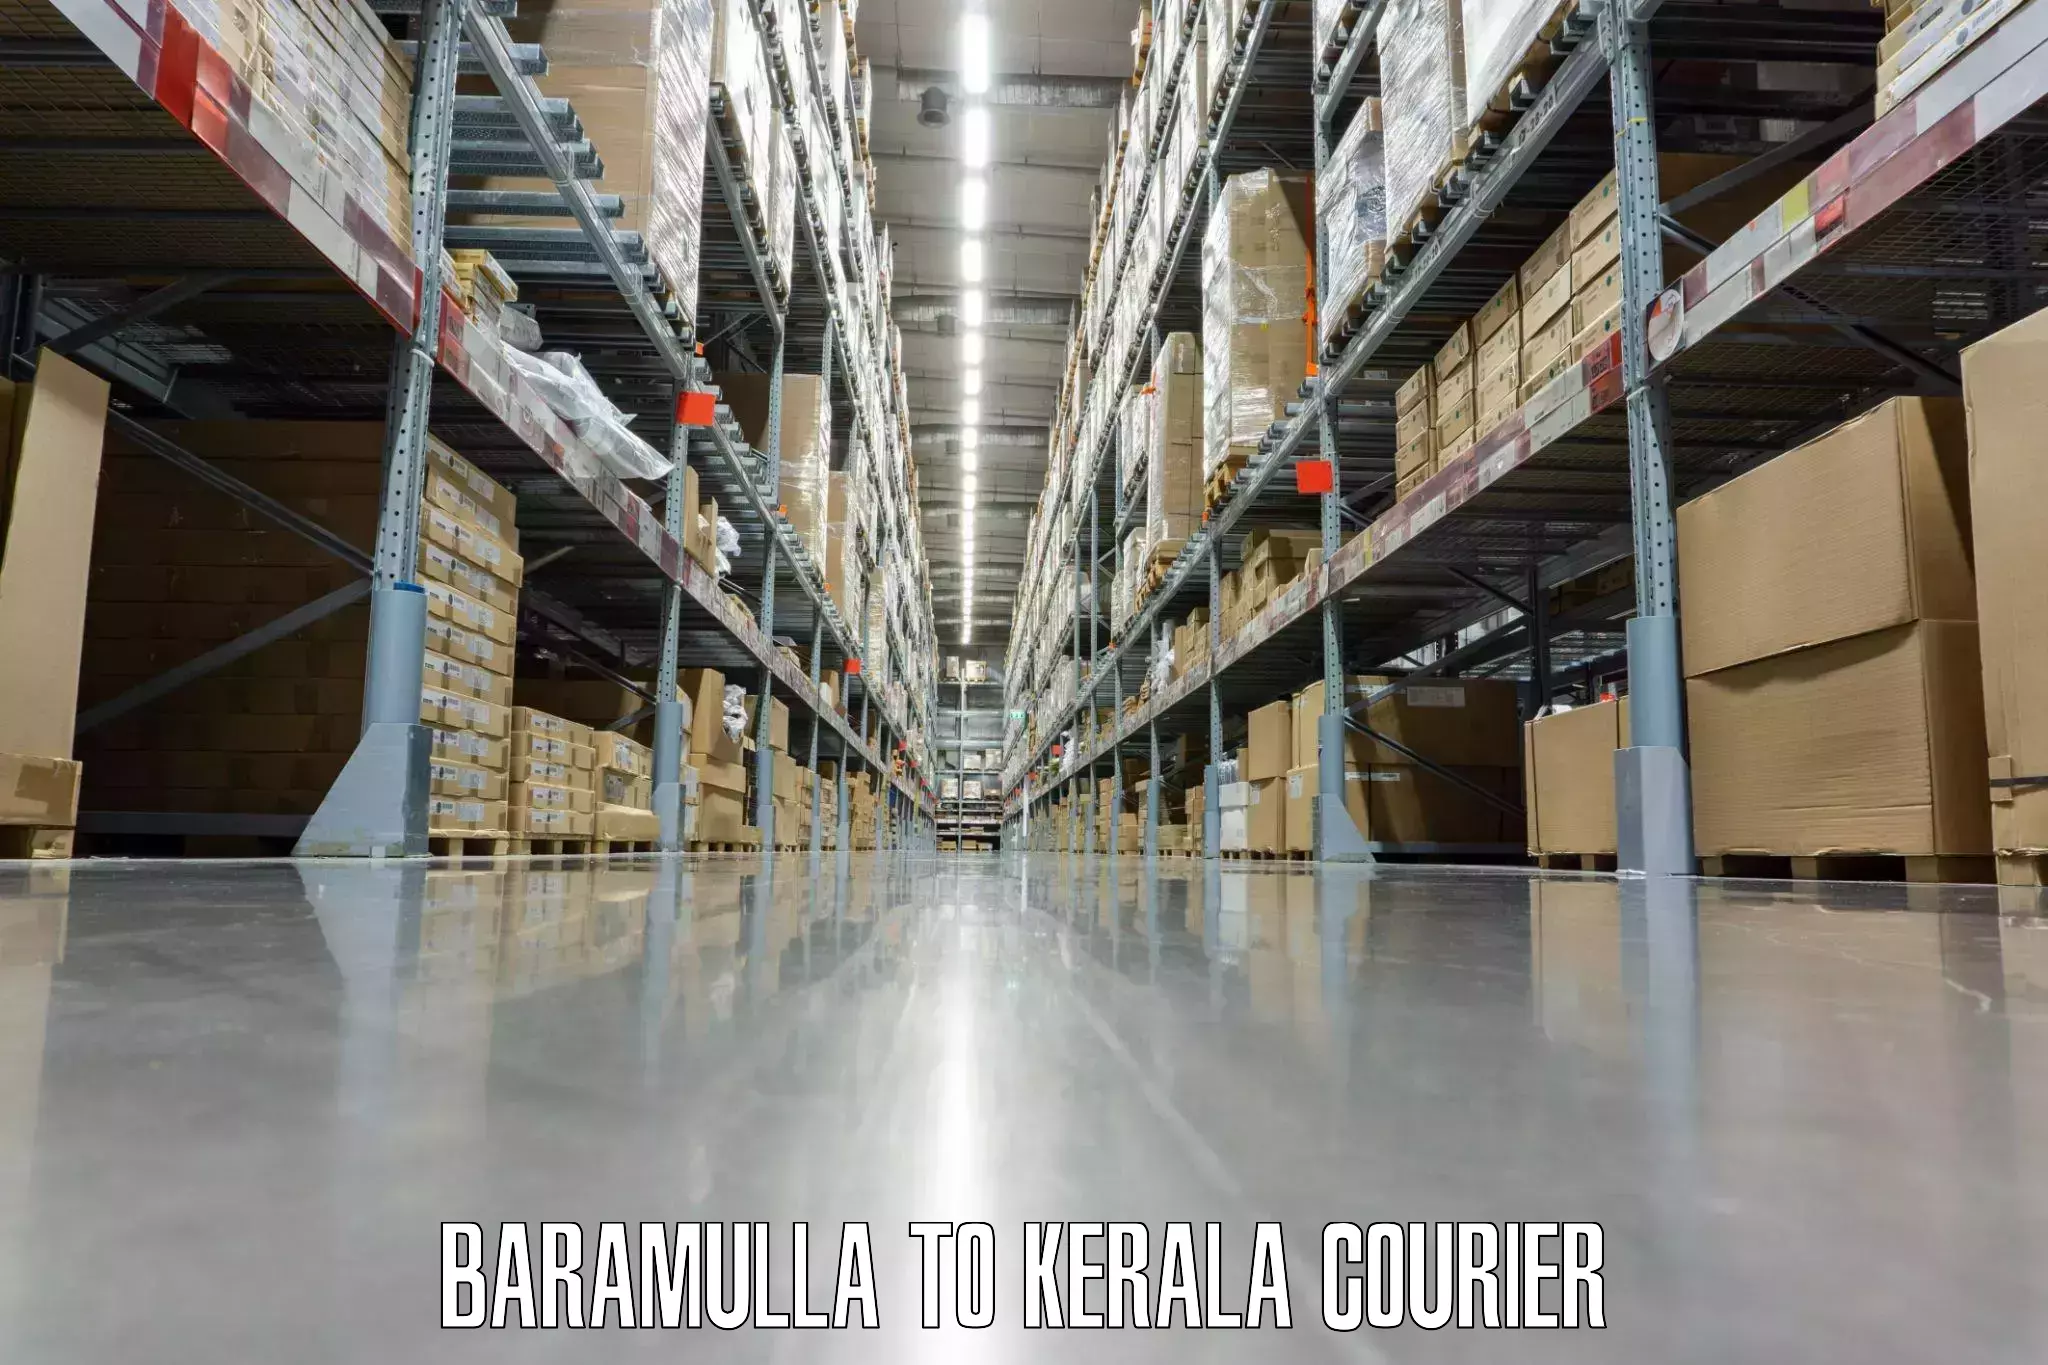 Same day luggage service Baramulla to Kerala